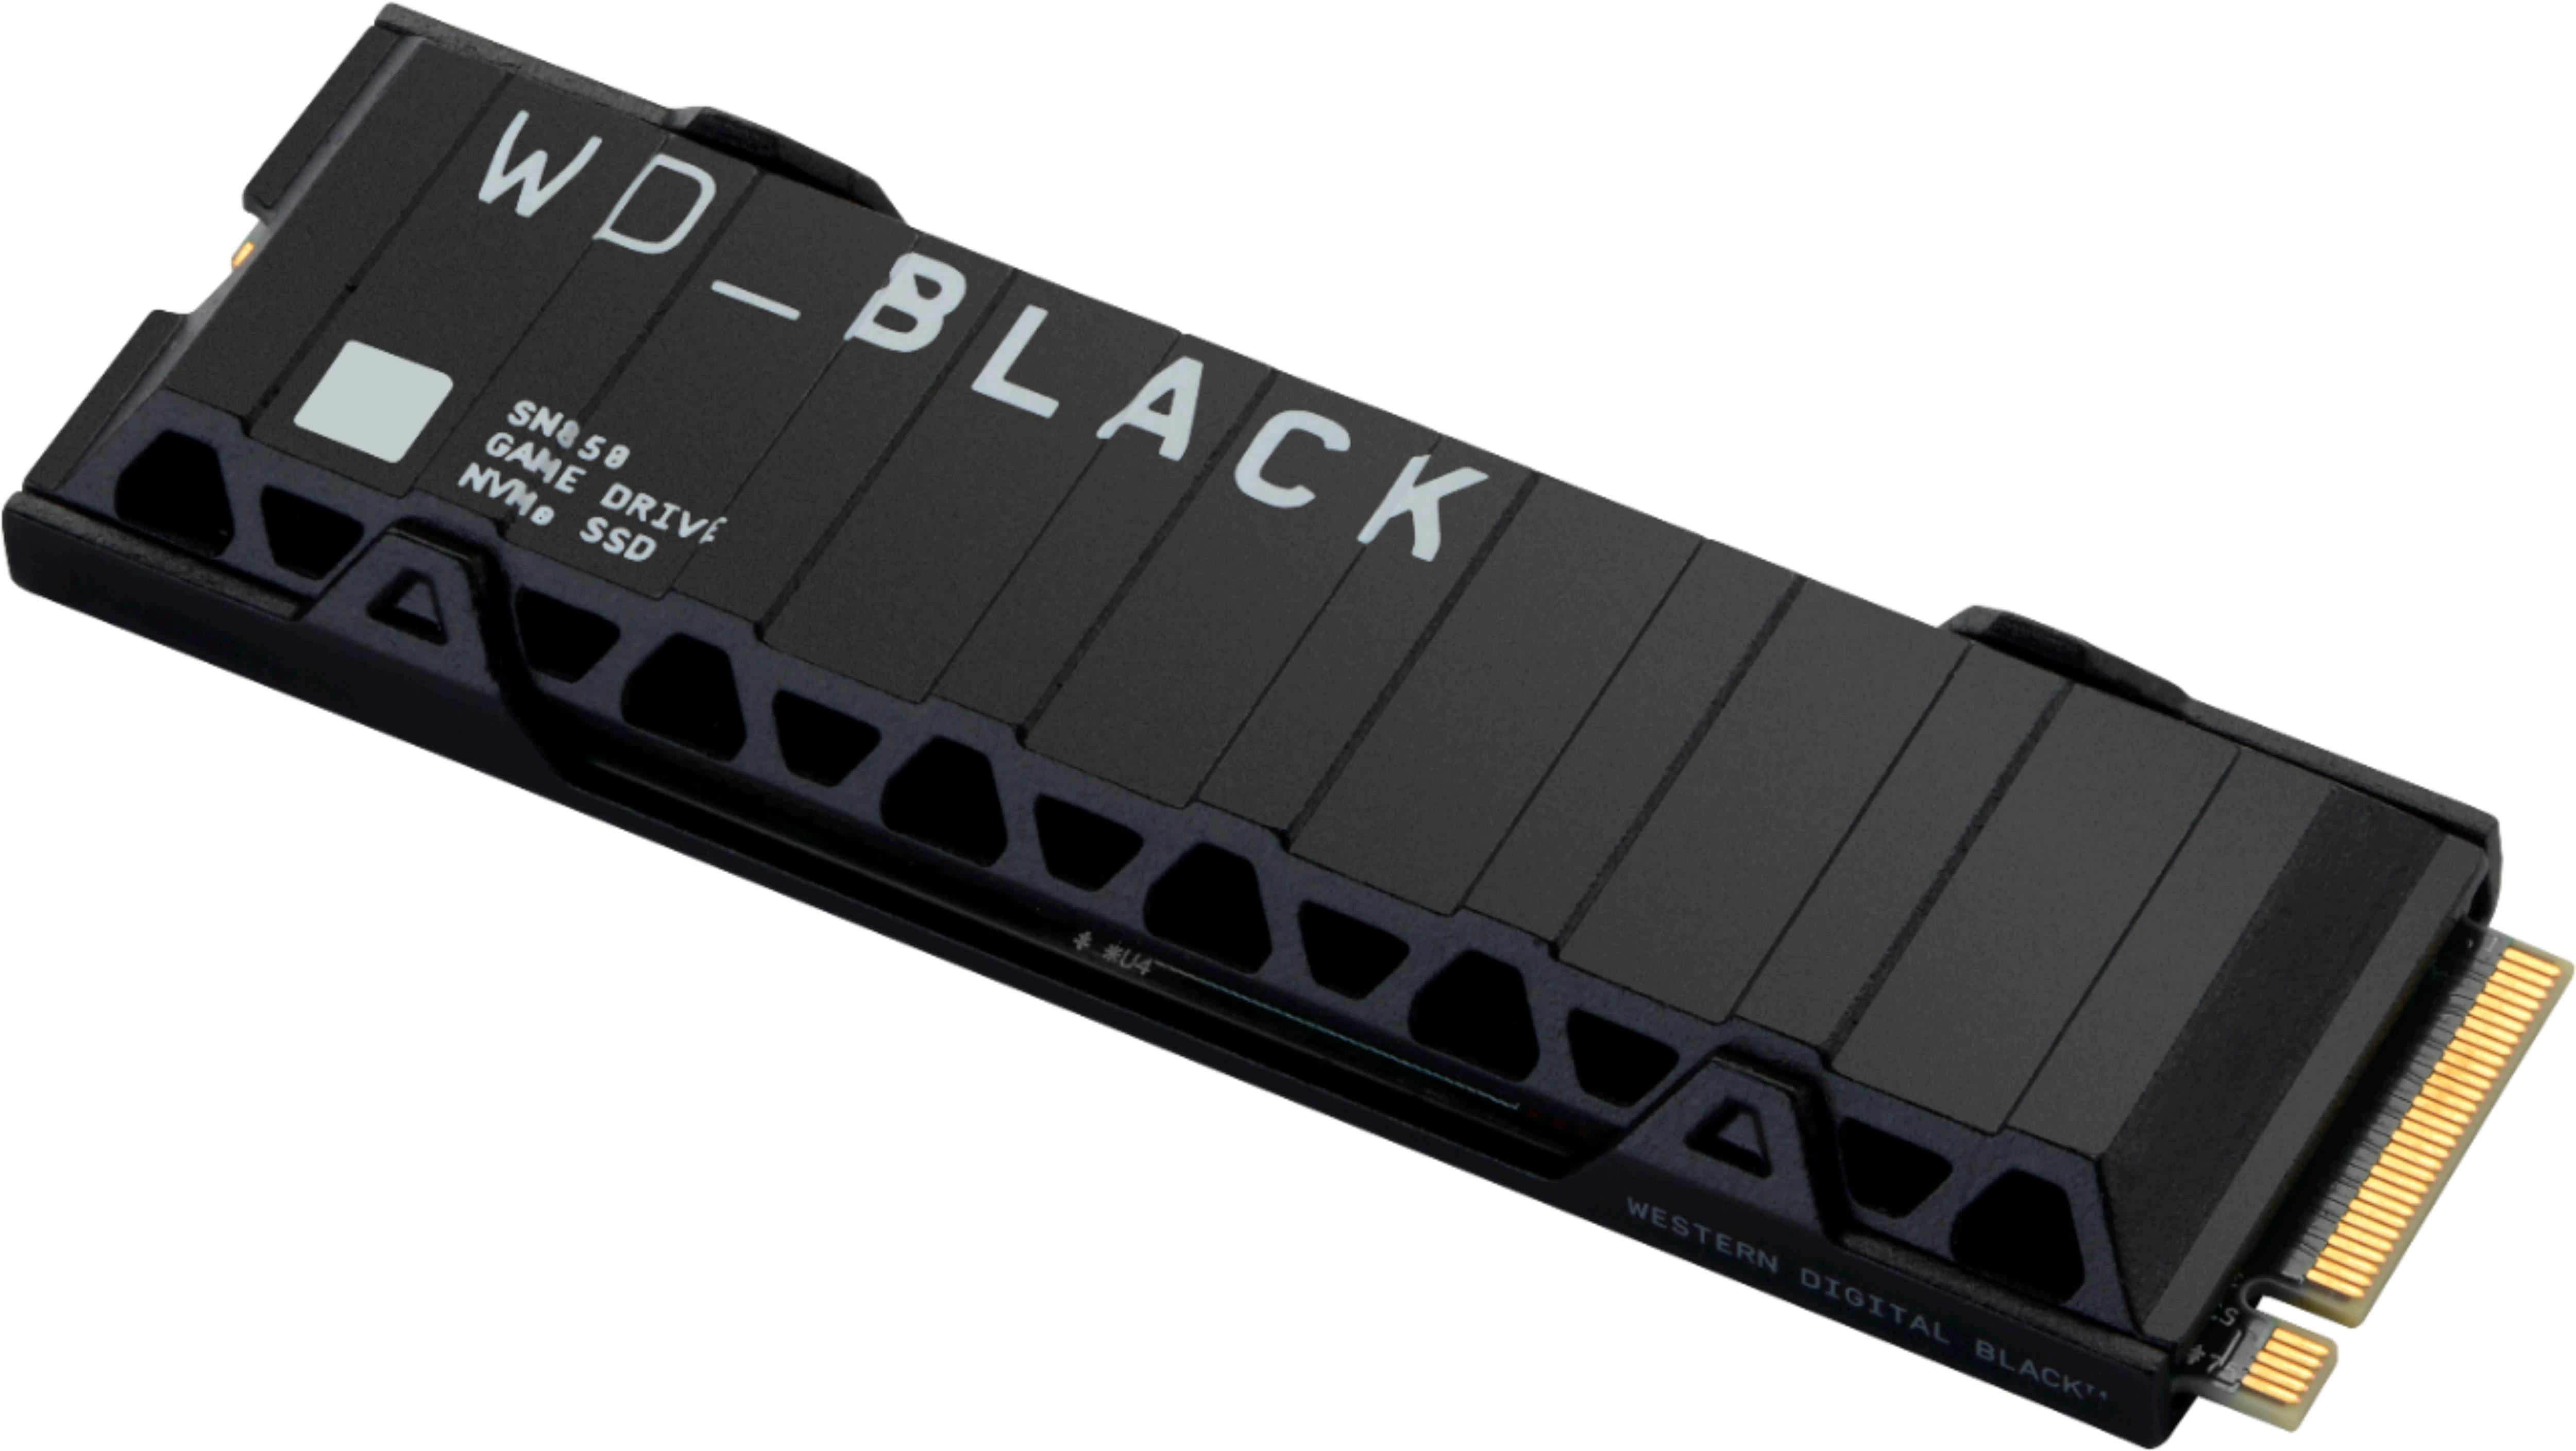 1TB Western Digital Black SN850 NVMe M2 SSD PCIe for $103.99 Shipped